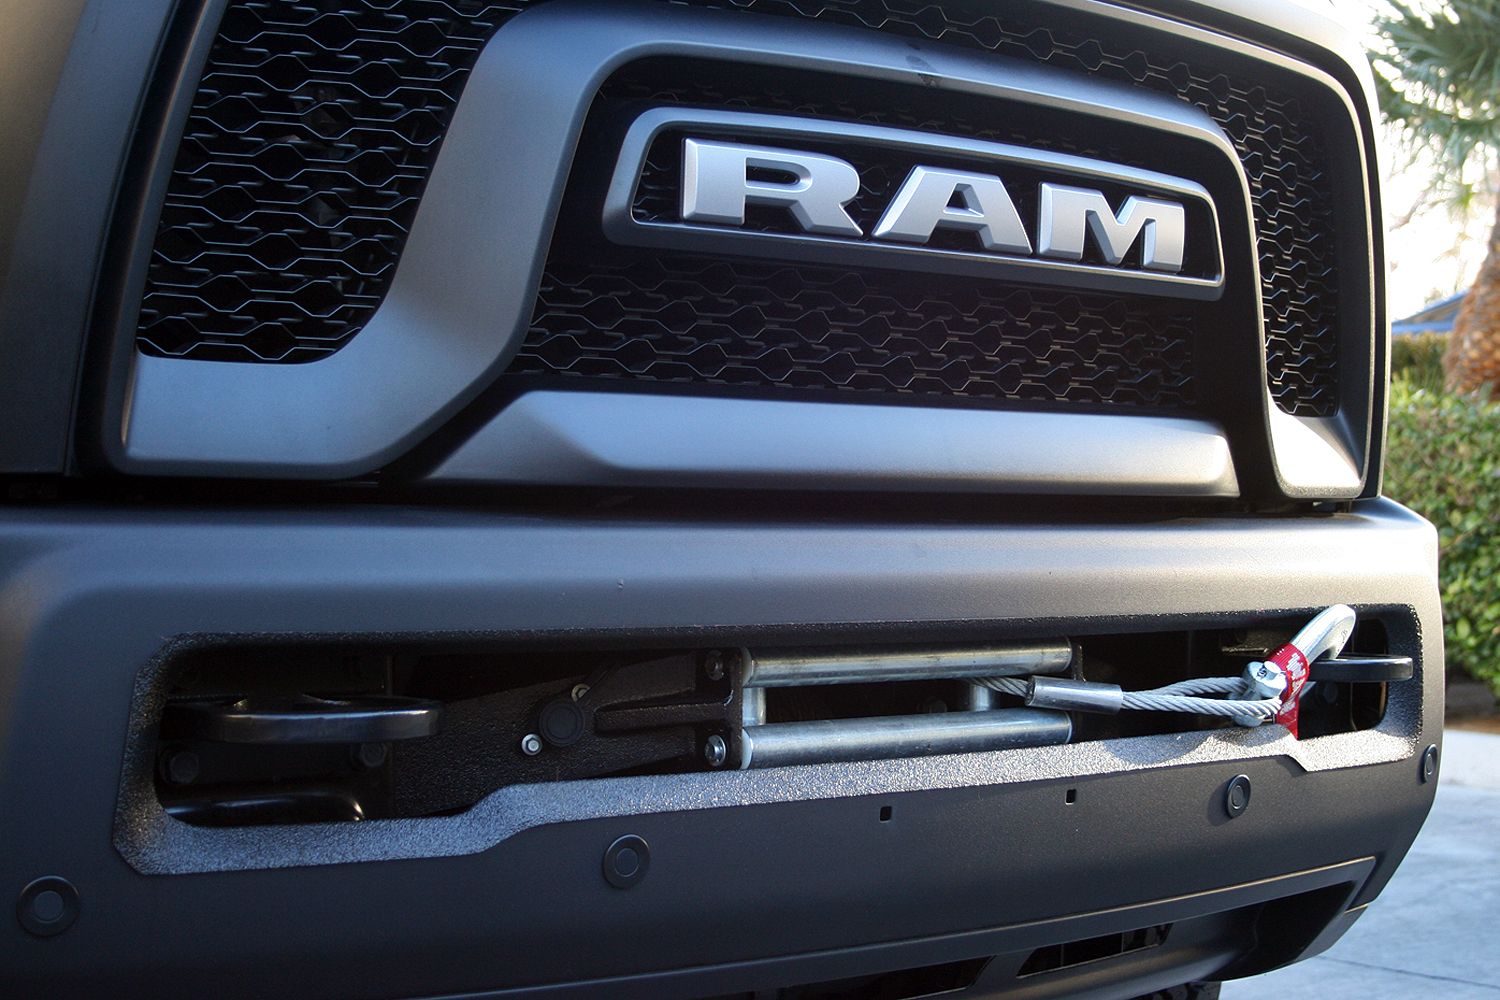 2017 Ram Power Wagon – Driven